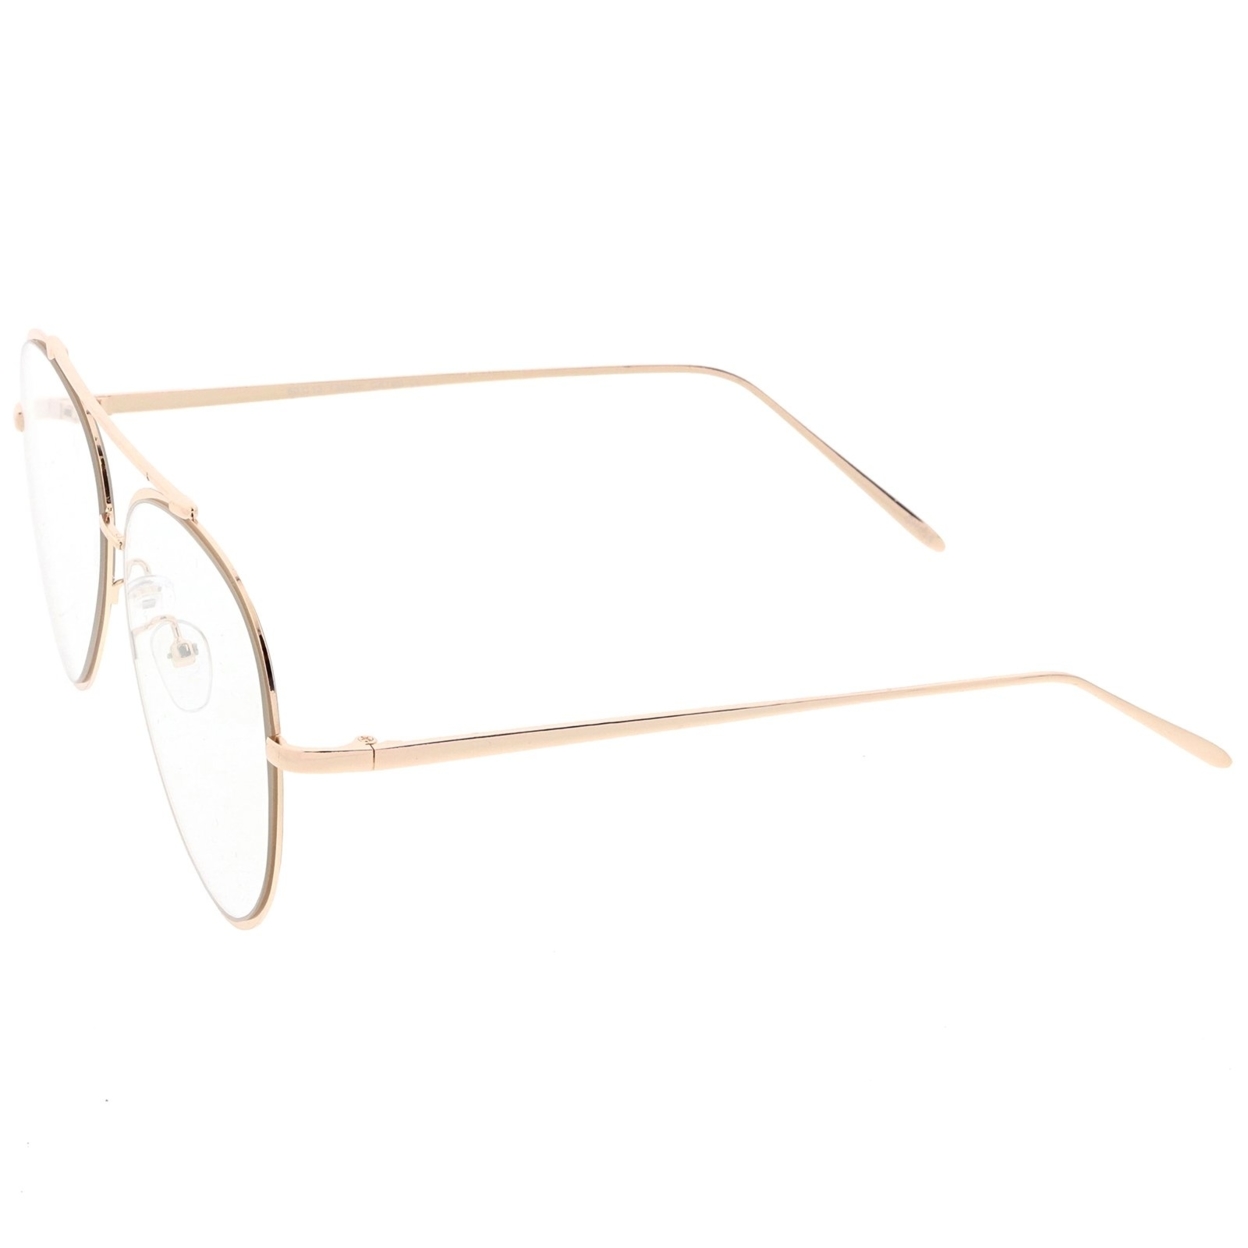 Mod Fashion Metal Aviator Eyeglasses Teardrop Rimless Clear Flat Lens 58mm - Silver / Clear